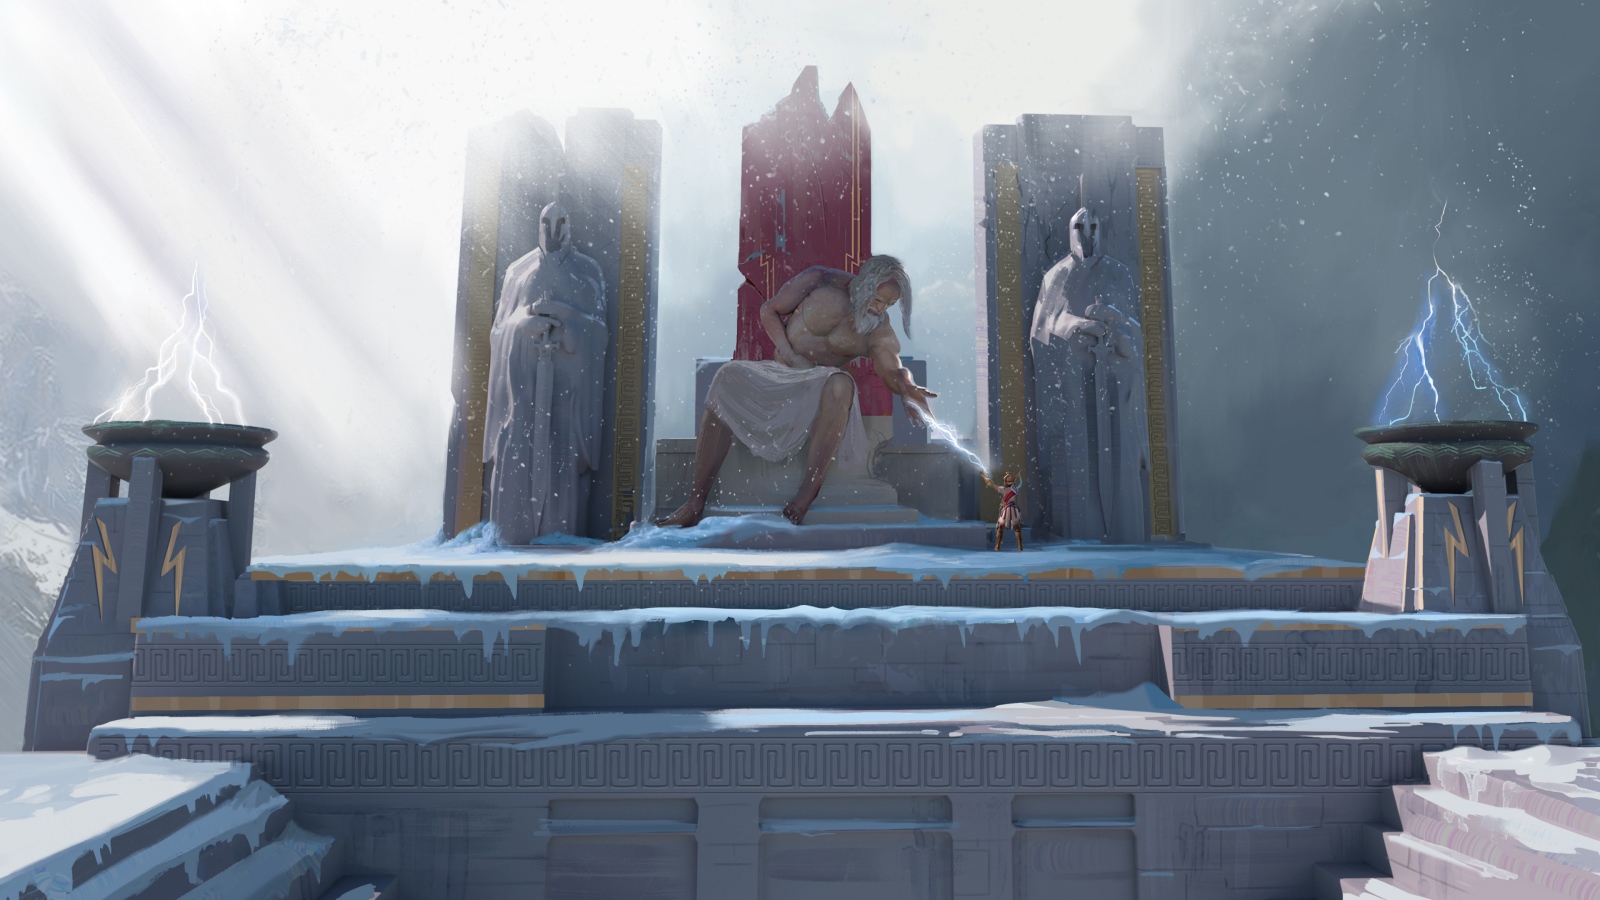 Бог на Олимпе компьютерная игра Gods & Monsters, 2020